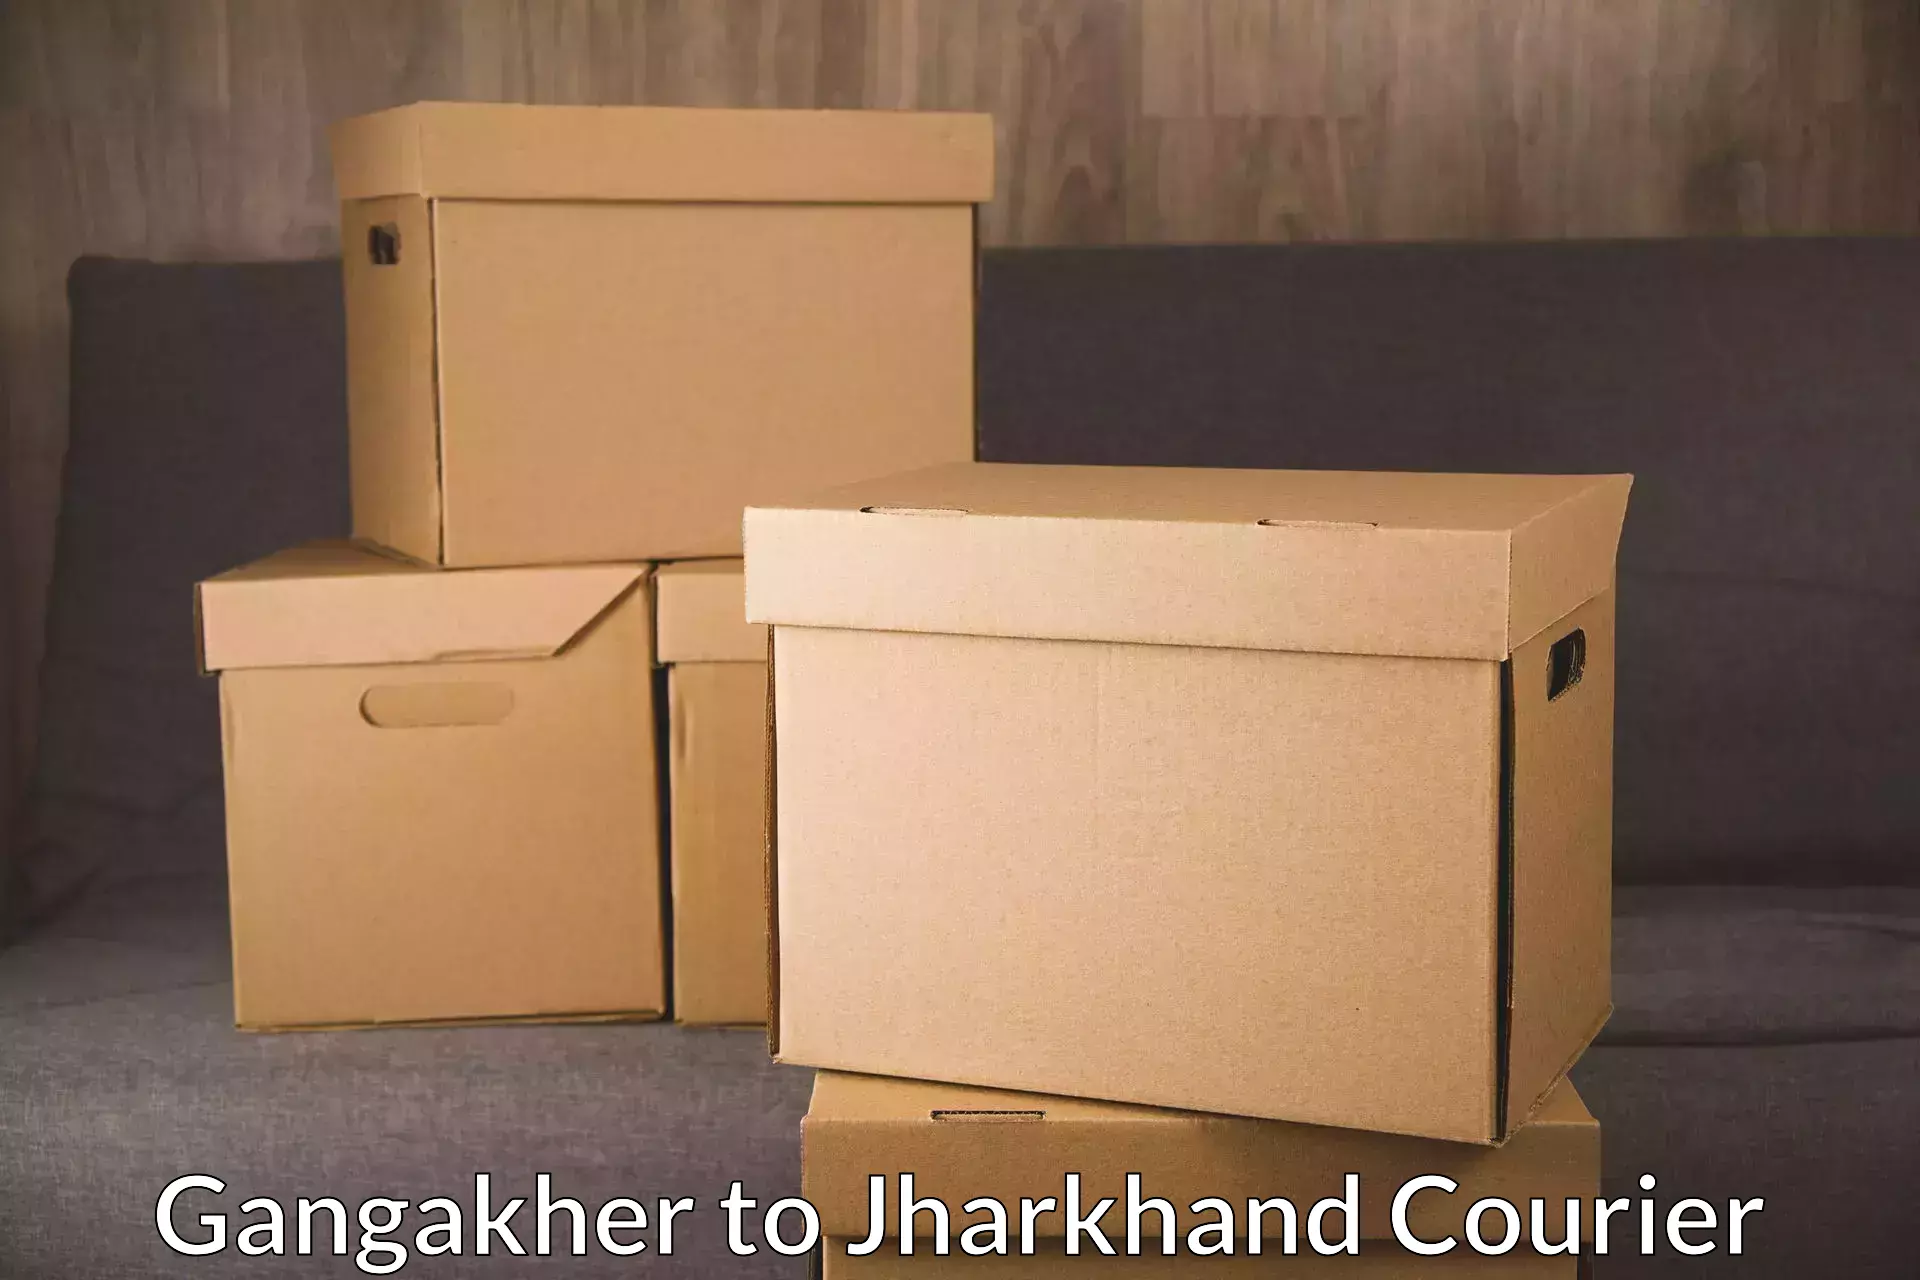 Full-service courier options Gangakher to Medininagar